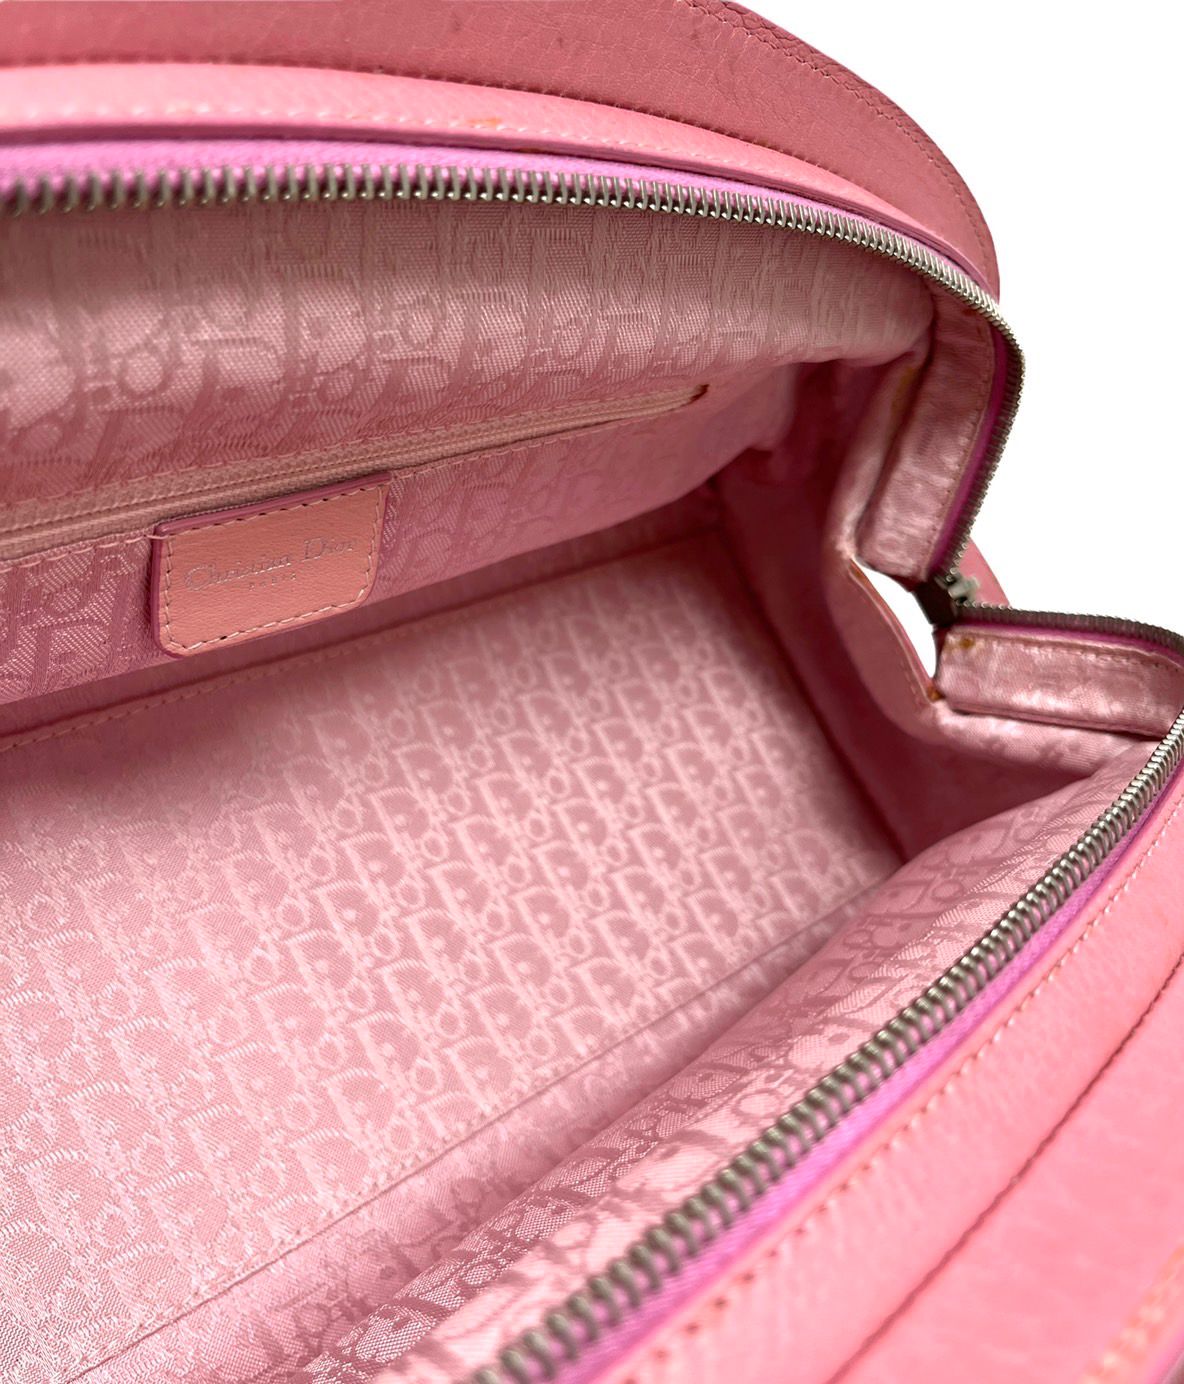 Dior Pink Floral Top Handle Bag